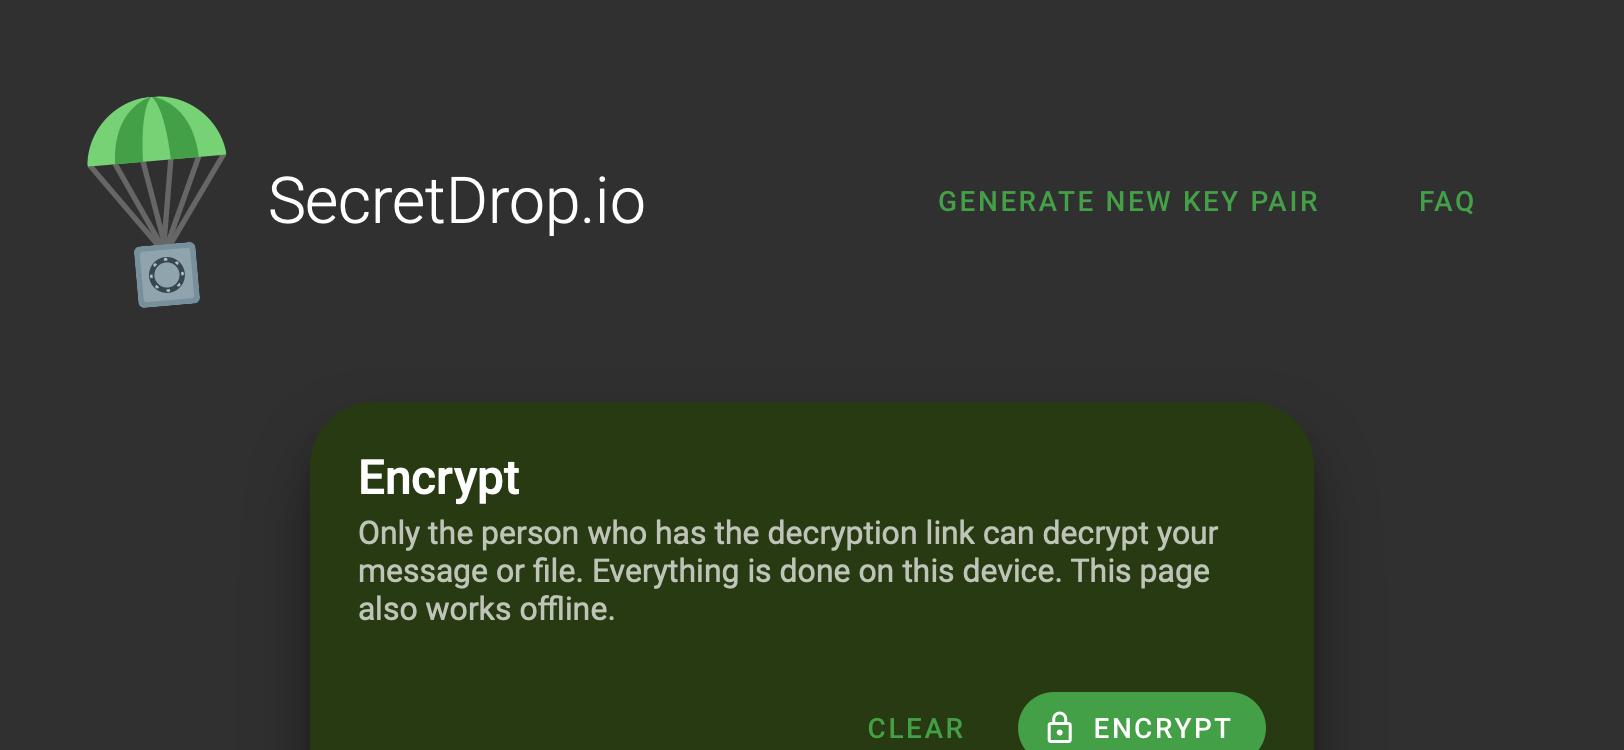 main-test-ts-encrypt-decrypt-encrypt-page-text-encryption-screenshot-812-375-0-snap.png